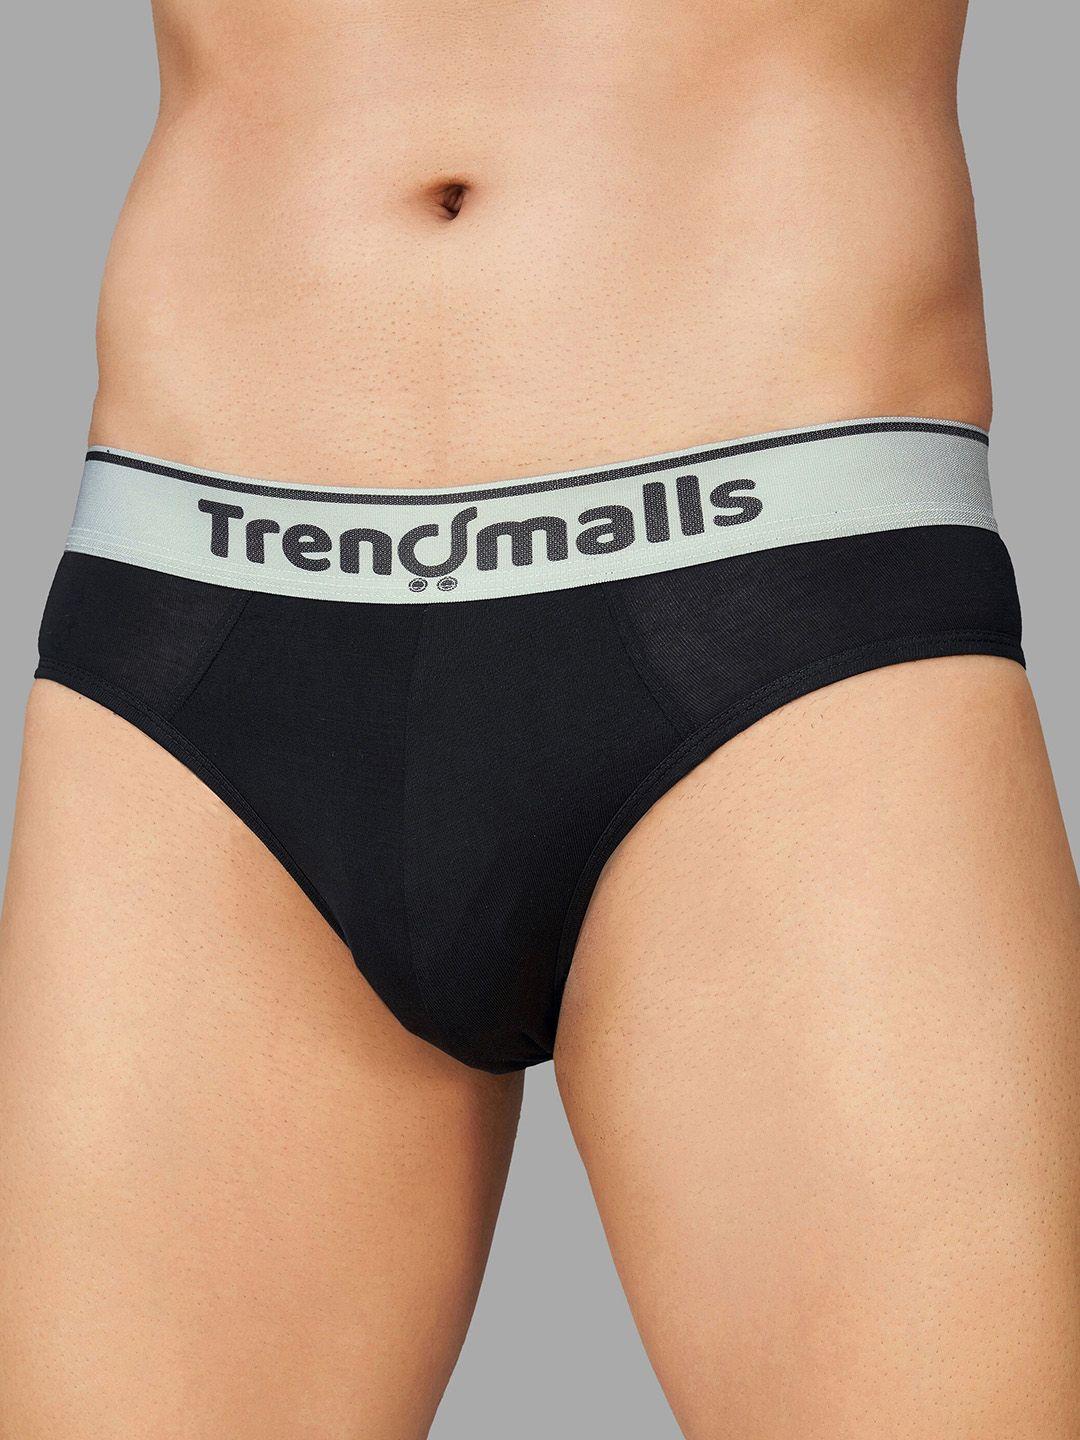 trendmalls brand logo printed mid-rise 4-way stretch modal basic brief tm-mu01-black-s